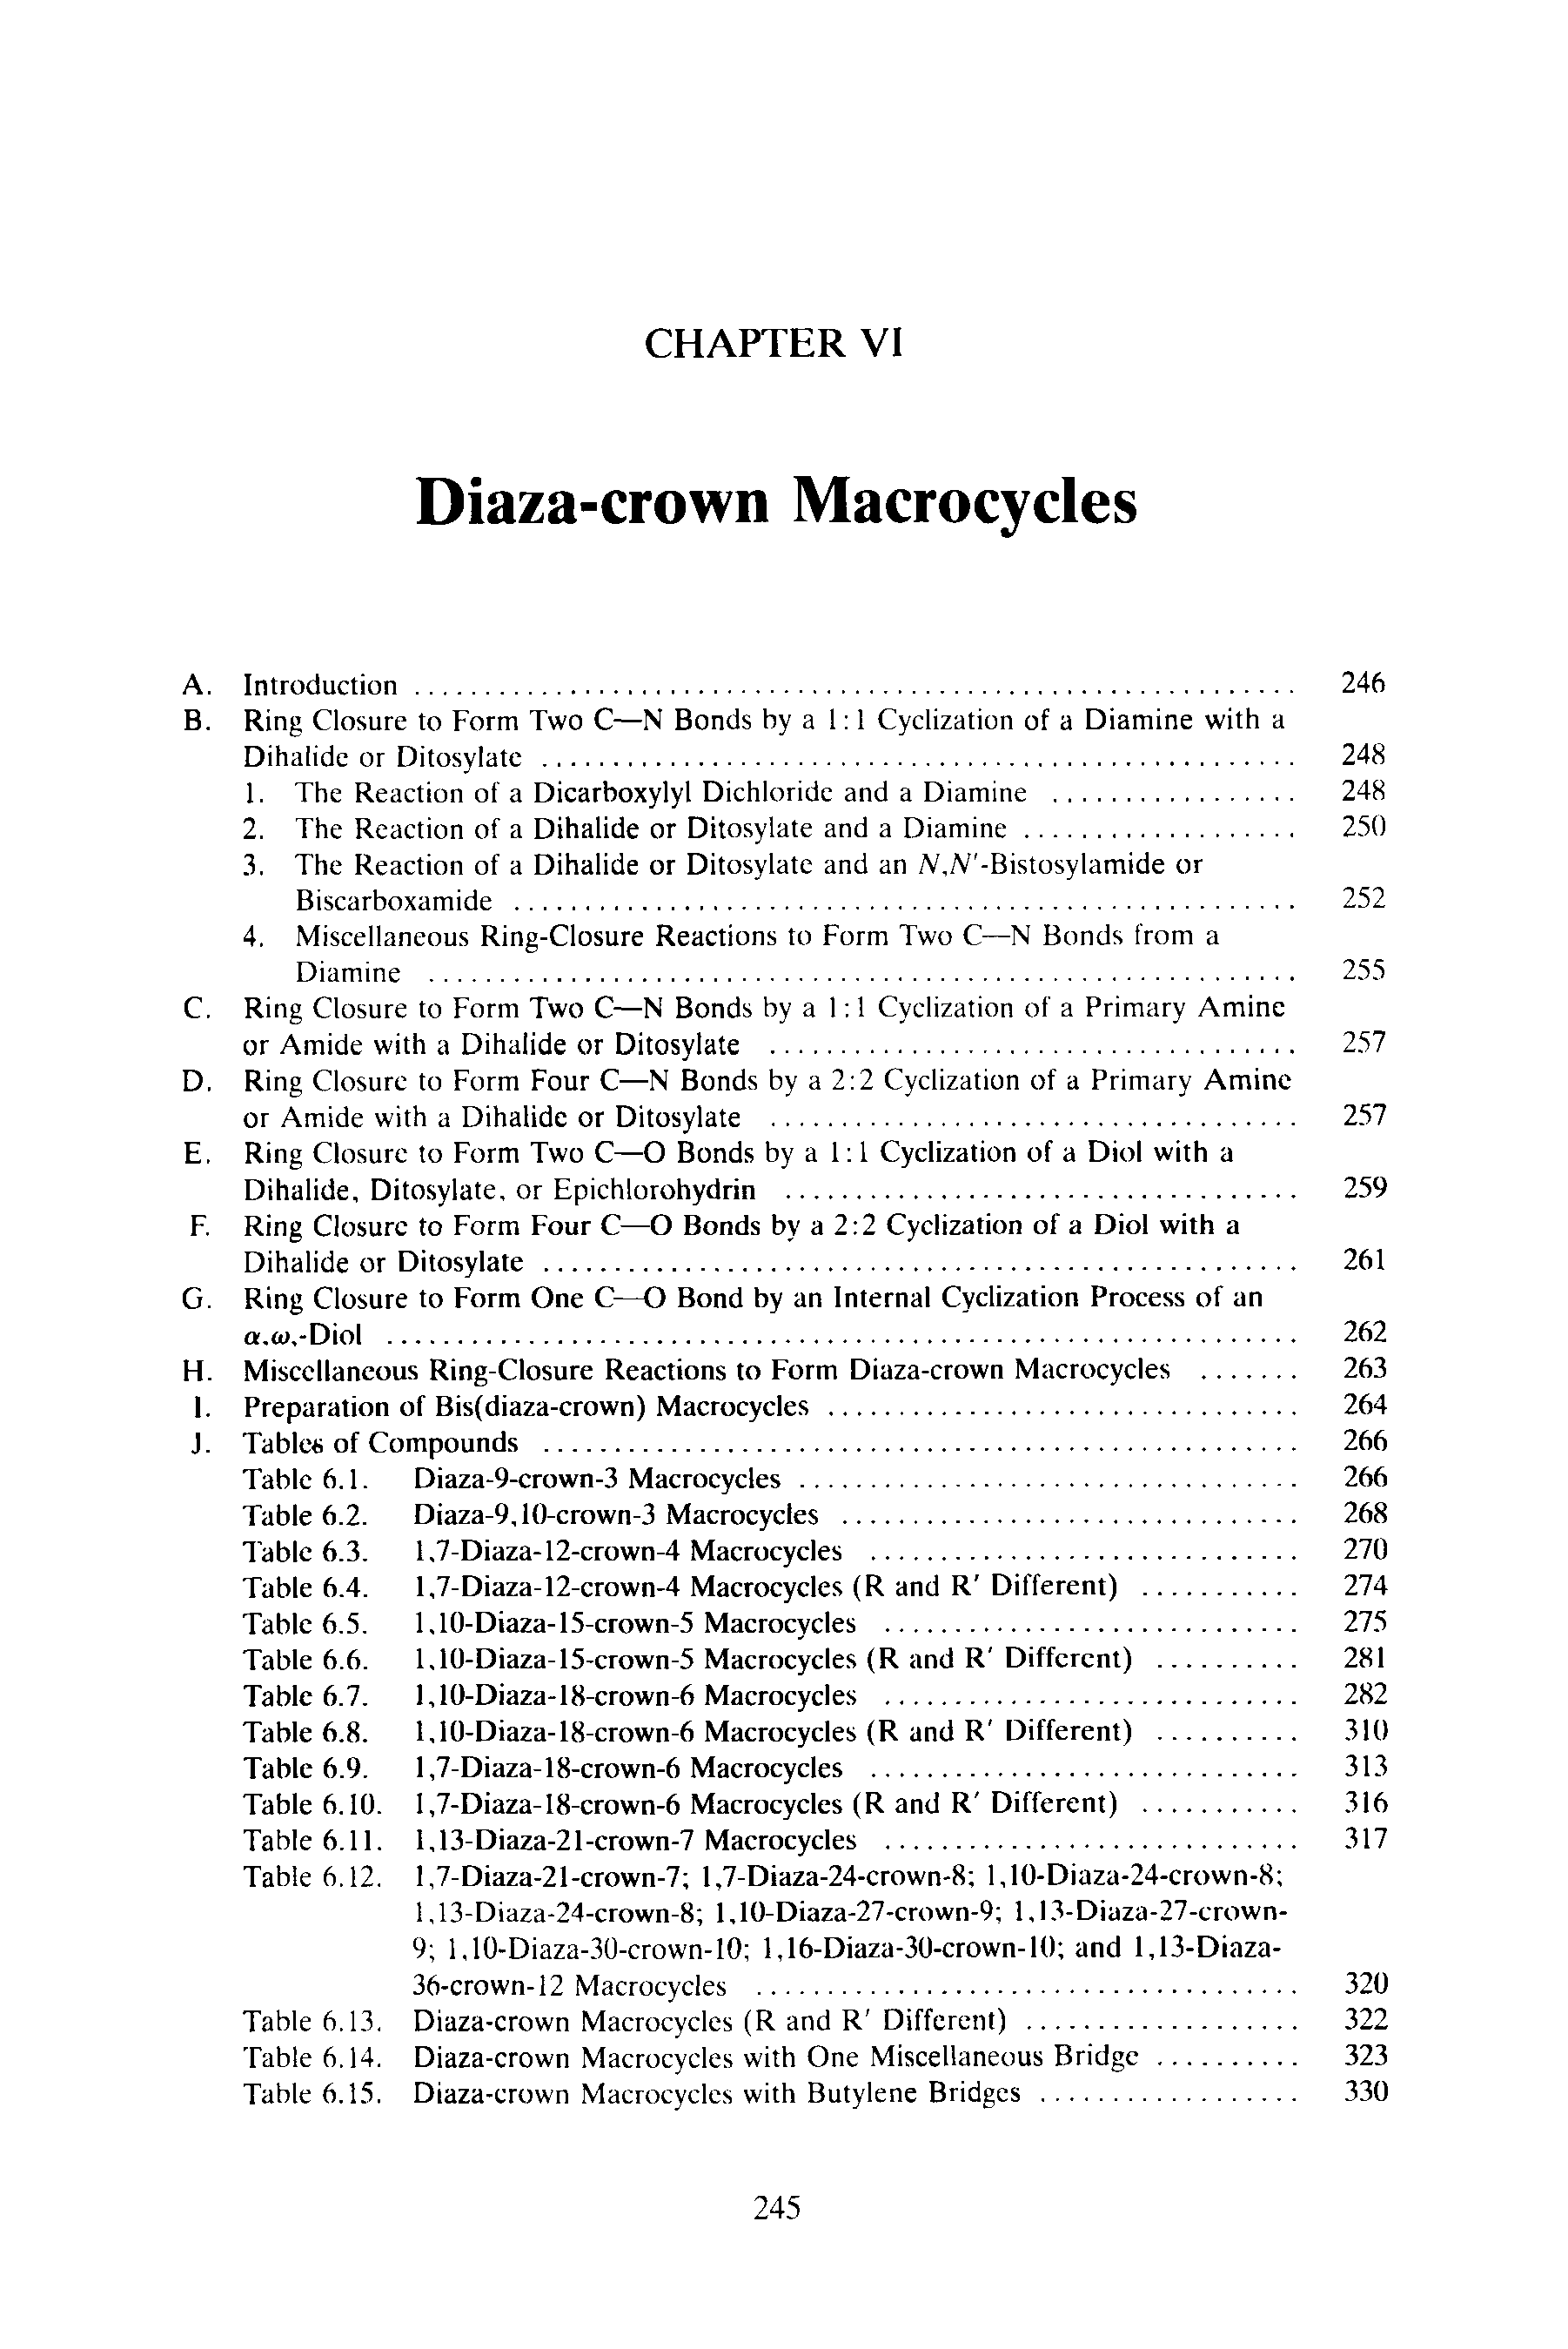 Table 6.15. Diaza-crown Macrocyclcs with Butylene Bridges. 330...